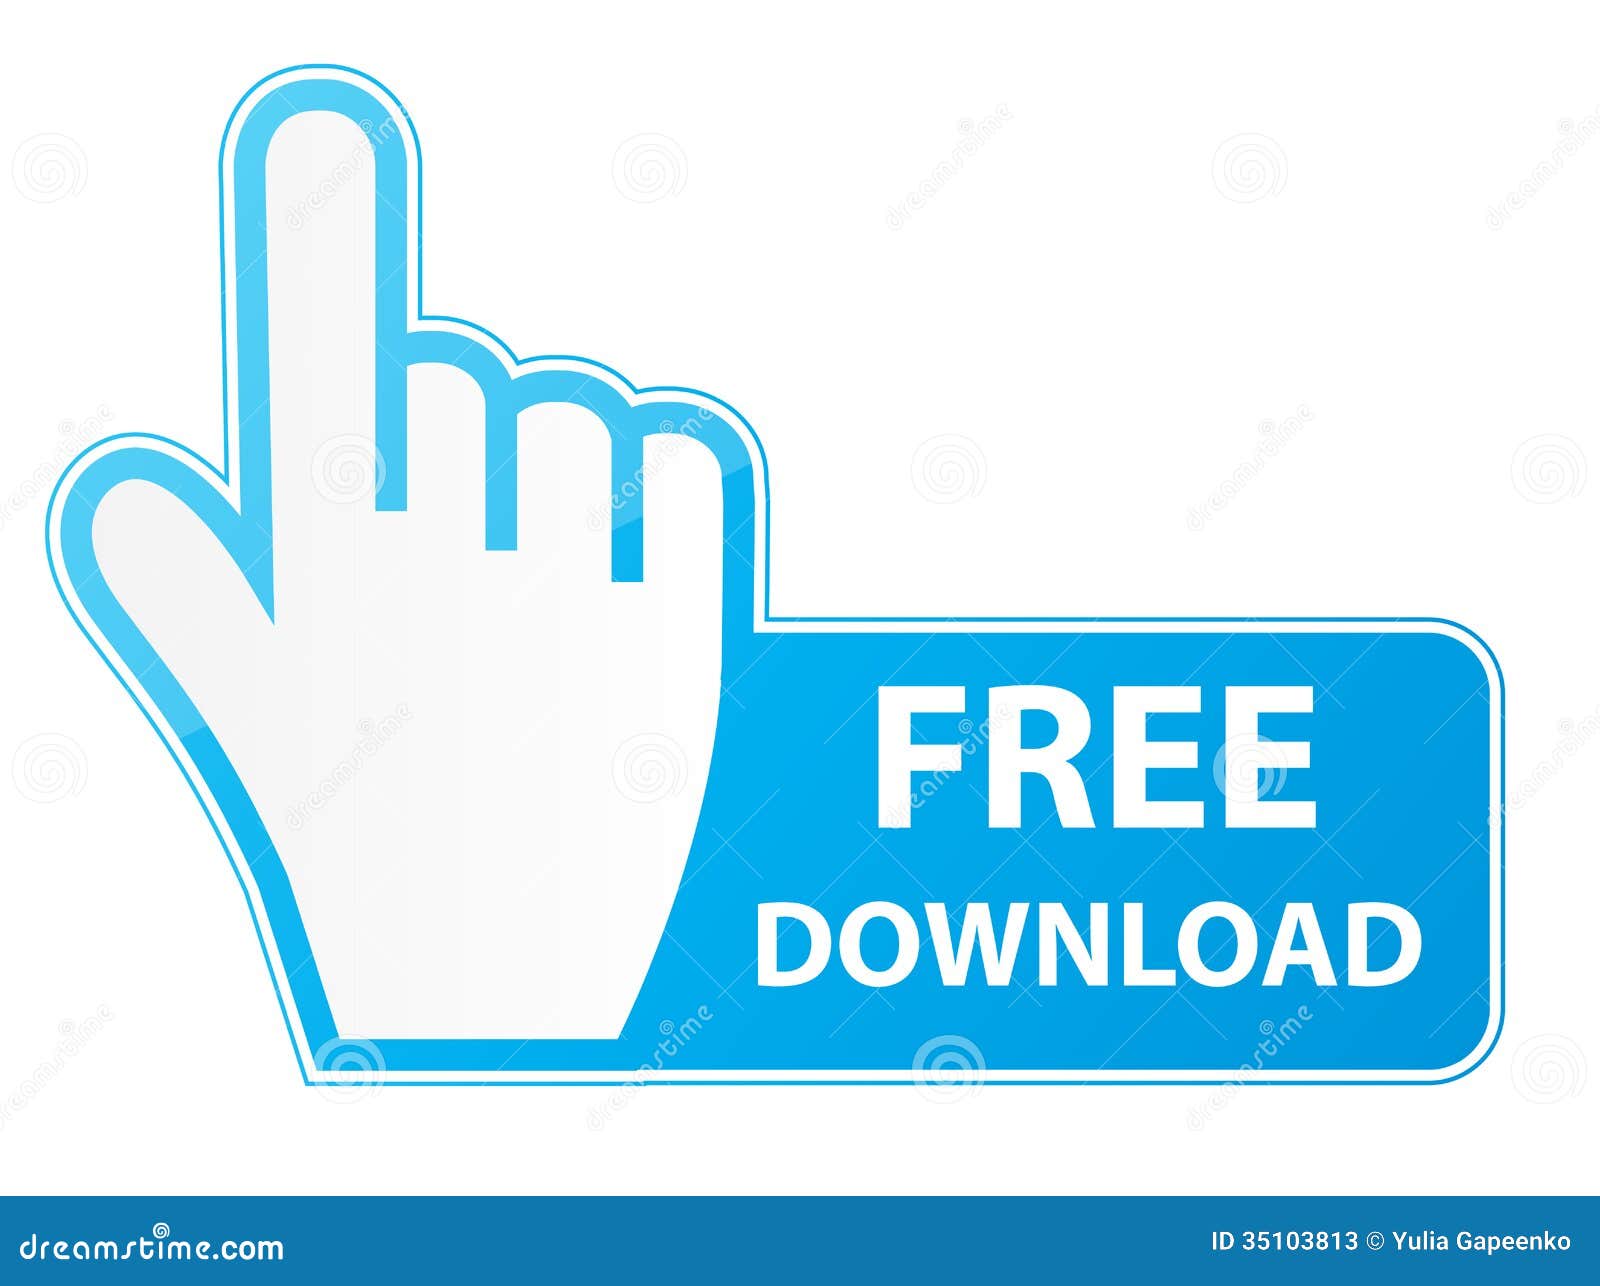 7files Crack Keygen Free Download [Win/Mac]